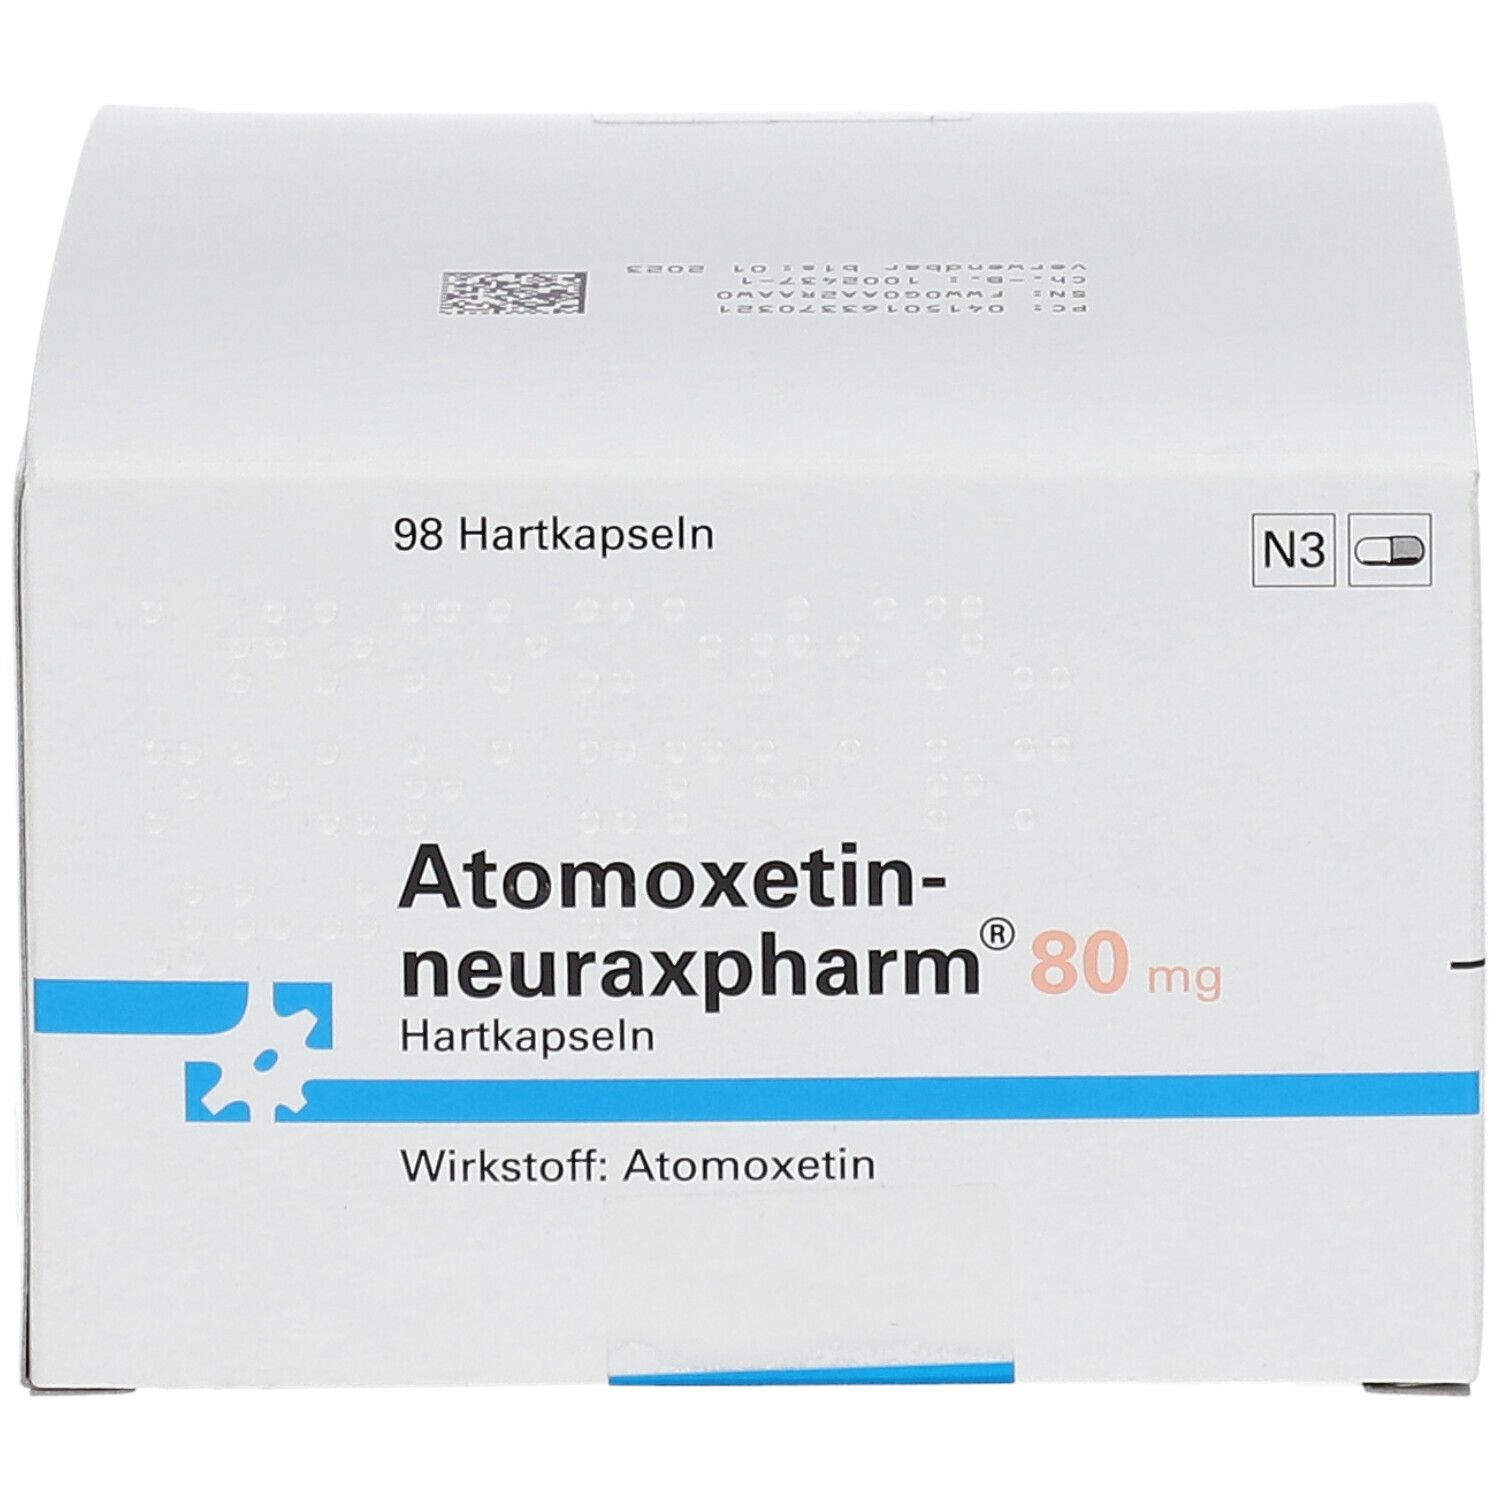 Atomoxetin-neuraxpharm® 80 mg